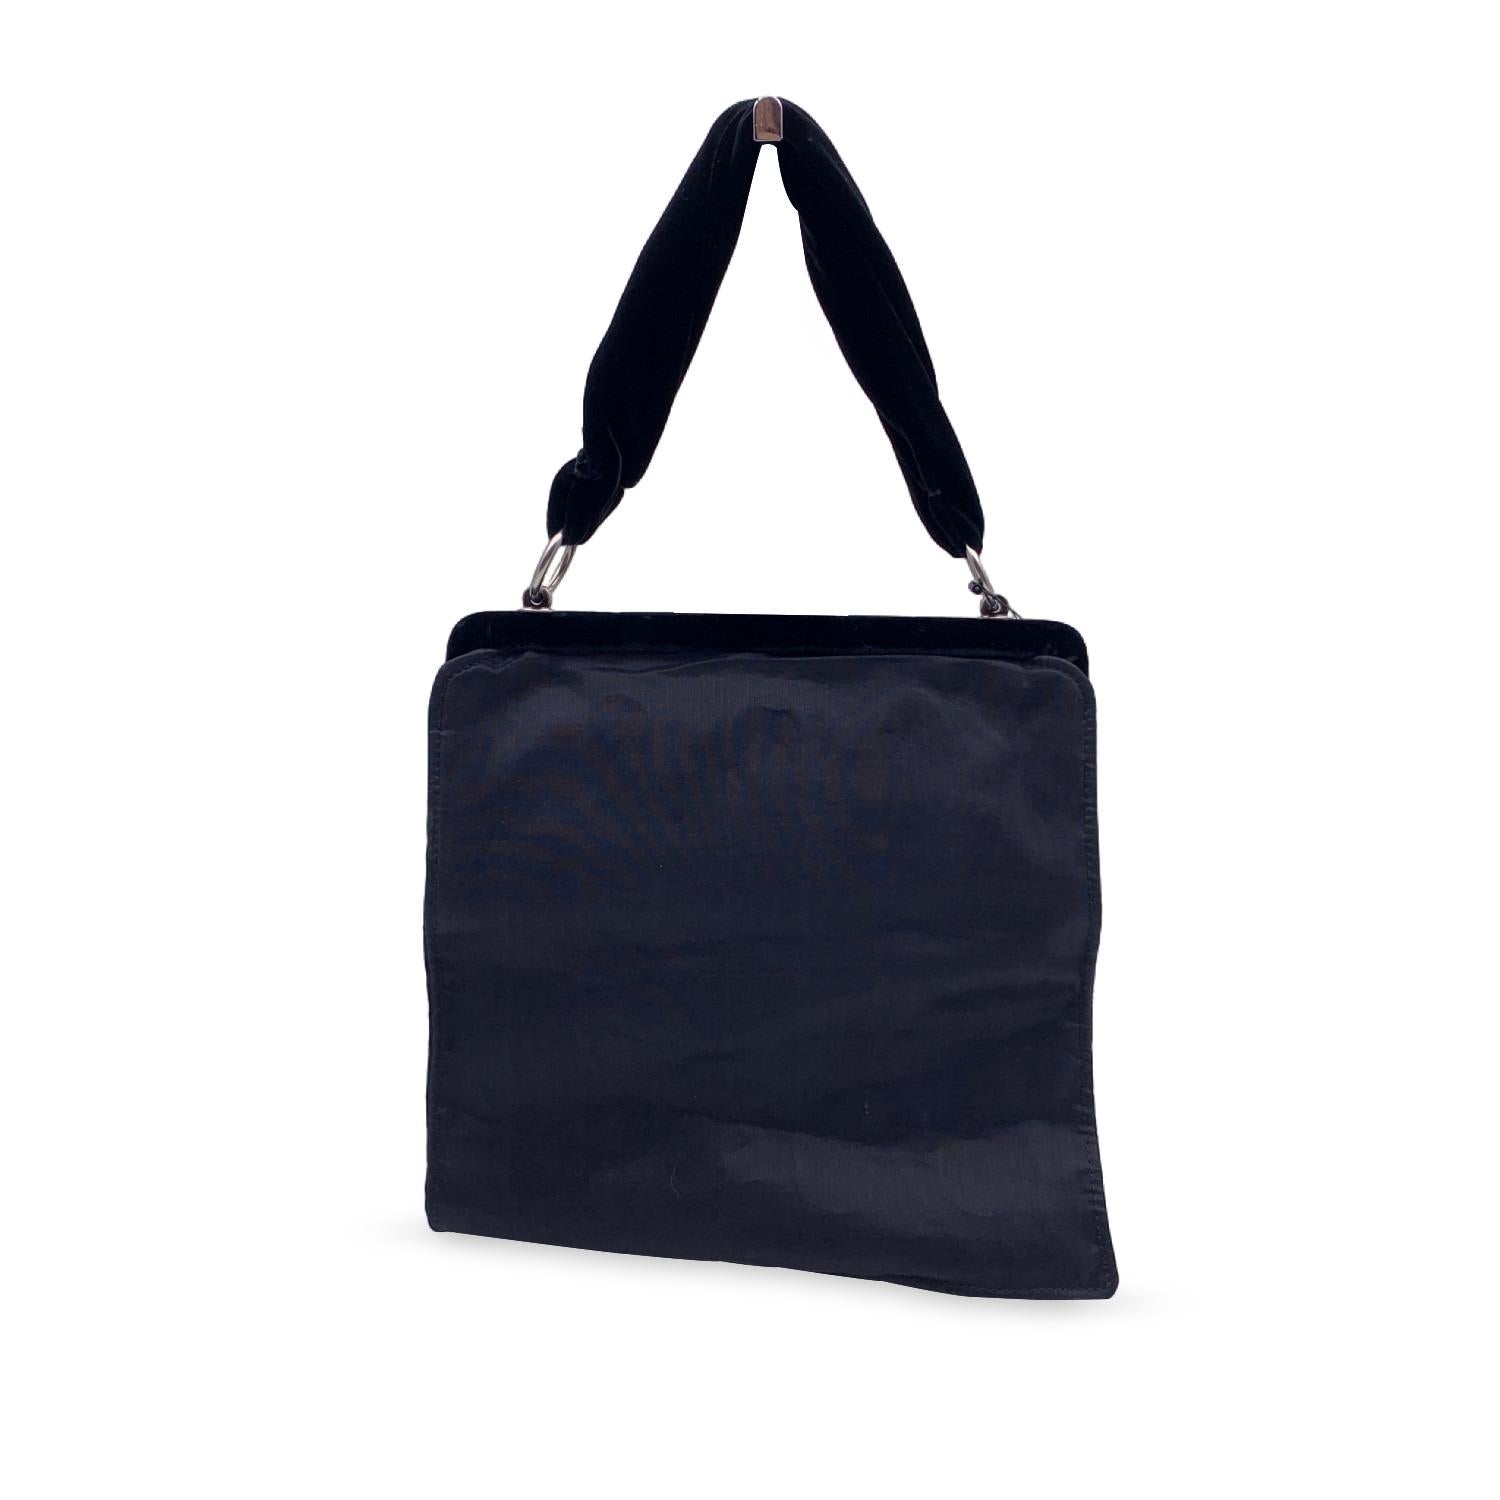 Yves Saint Laurent Black Fabric Velvet Evening Bag Handbag In Excellent Condition For Sale In Rome, Rome